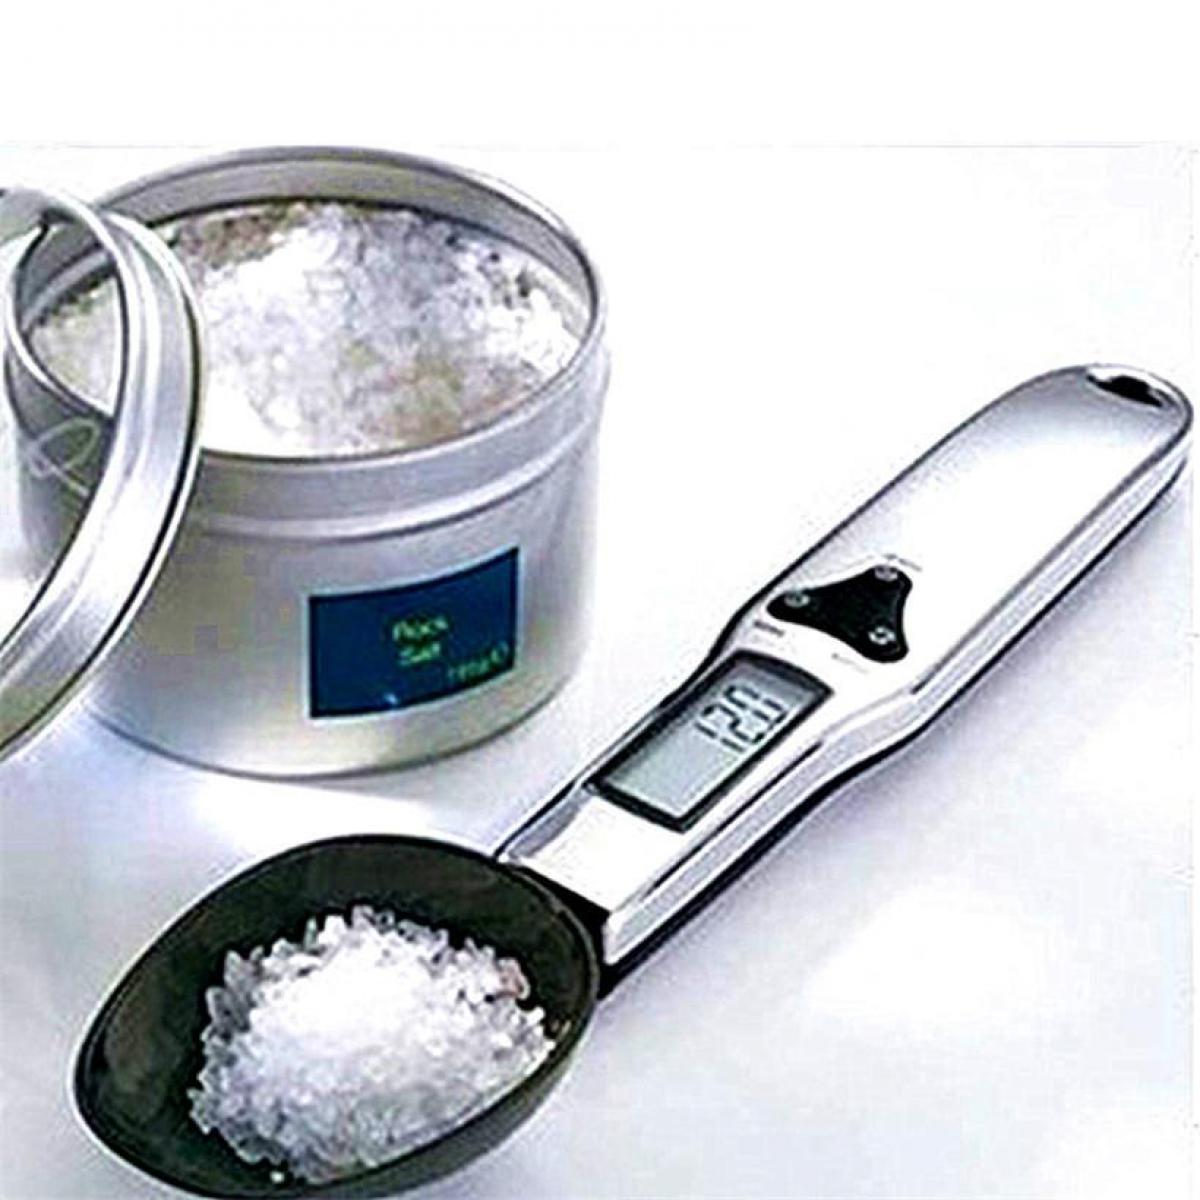 Justgreenbox - Portable LCD Digital Kitchen Scale Cuillère à mesurer Gram Electronic Weight Volumn Food 300g / 0.1g - 32723780826 - Pèse-personne